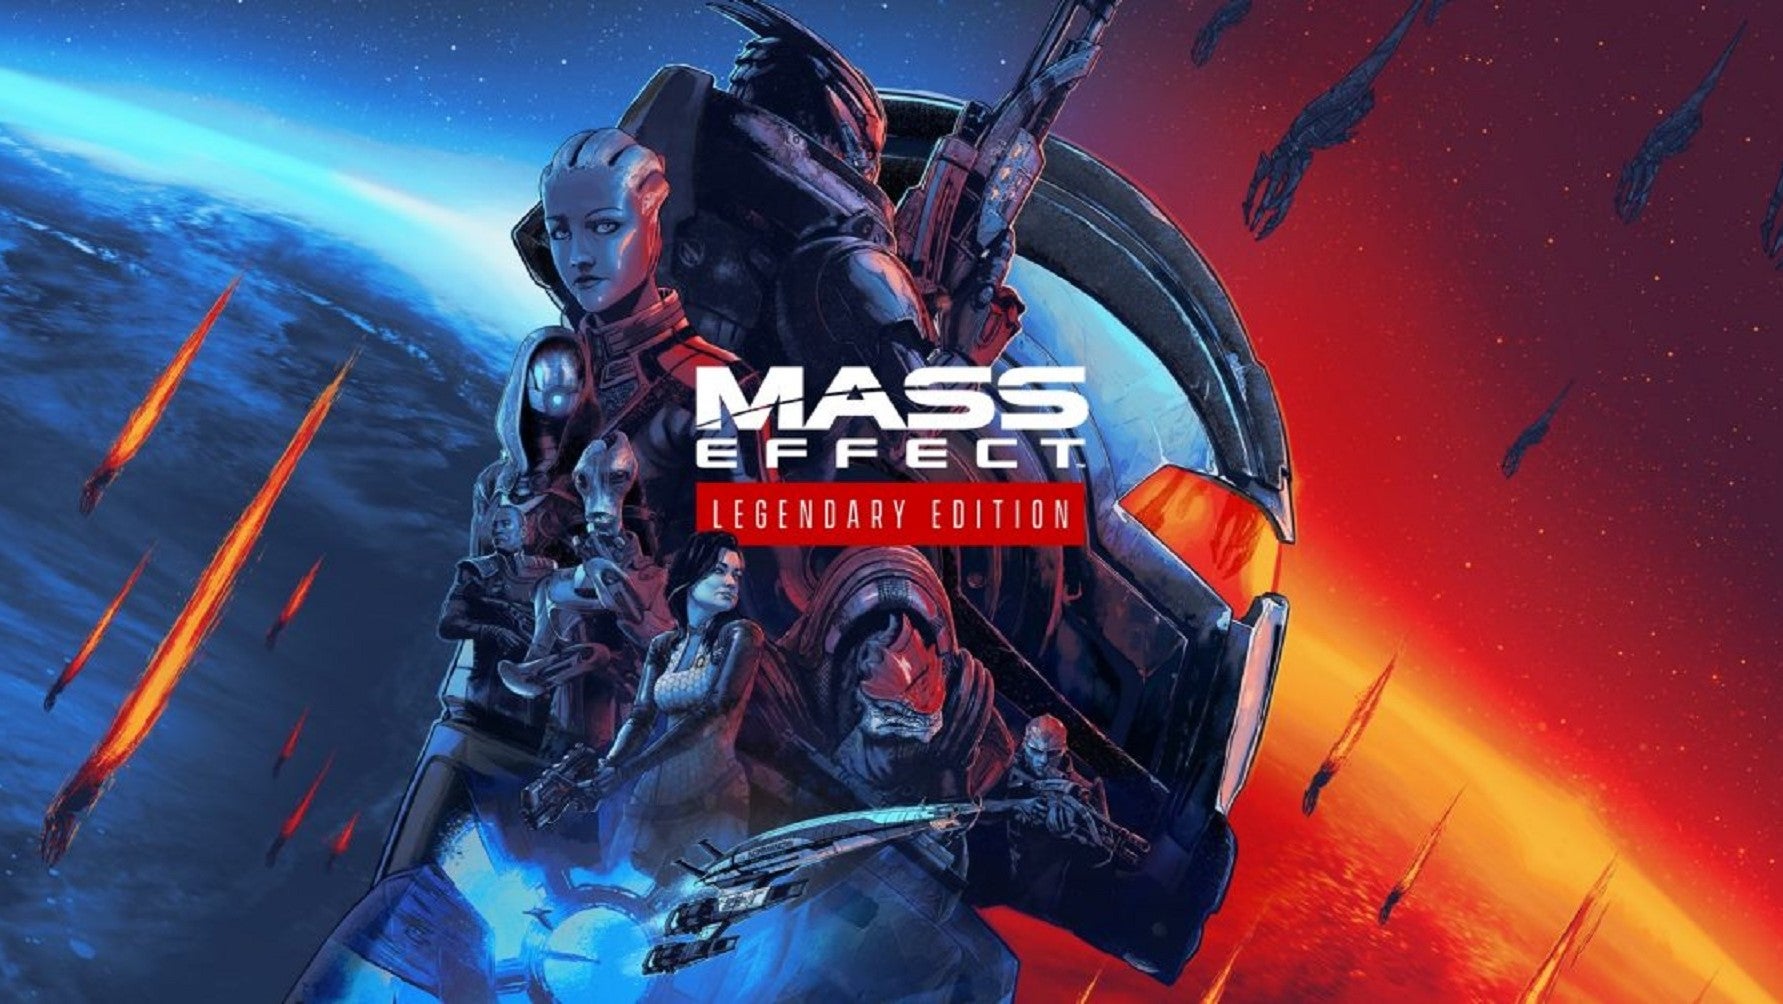 Mass Effect Legendary Edition official image